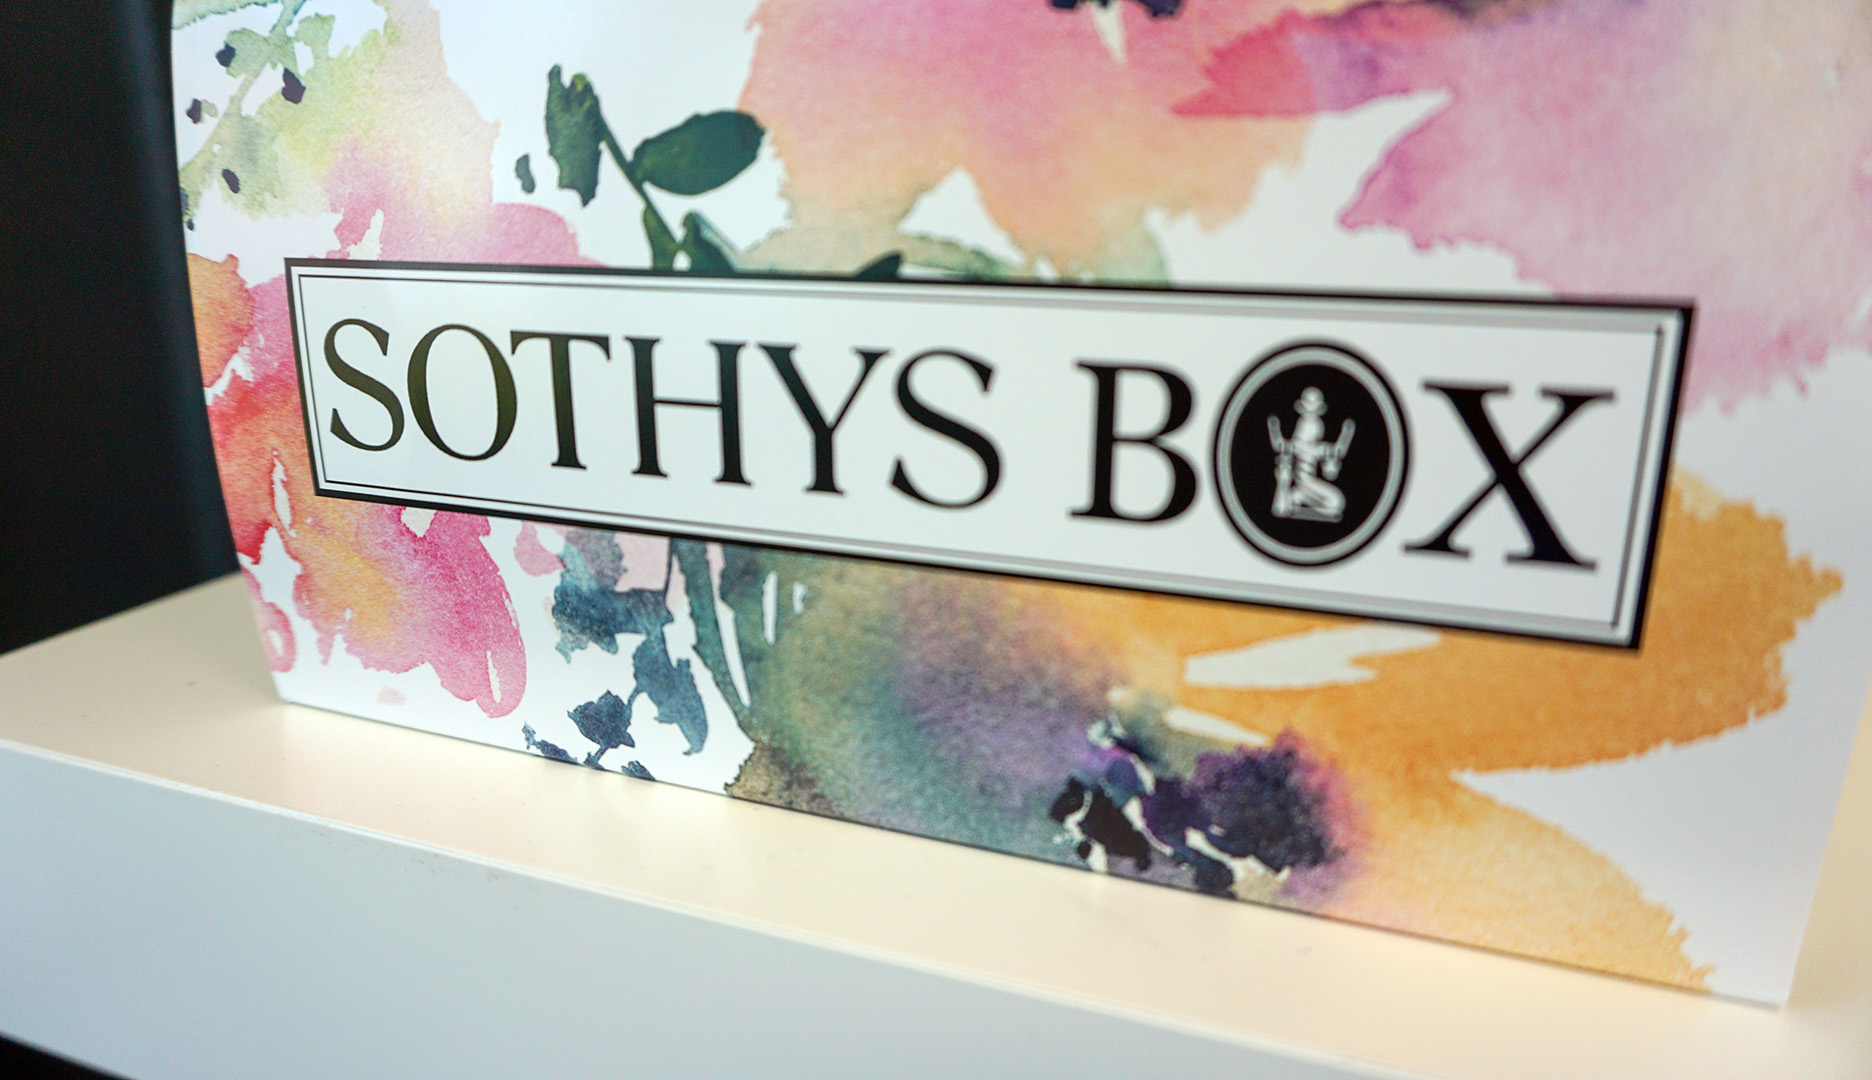 Sothys Box